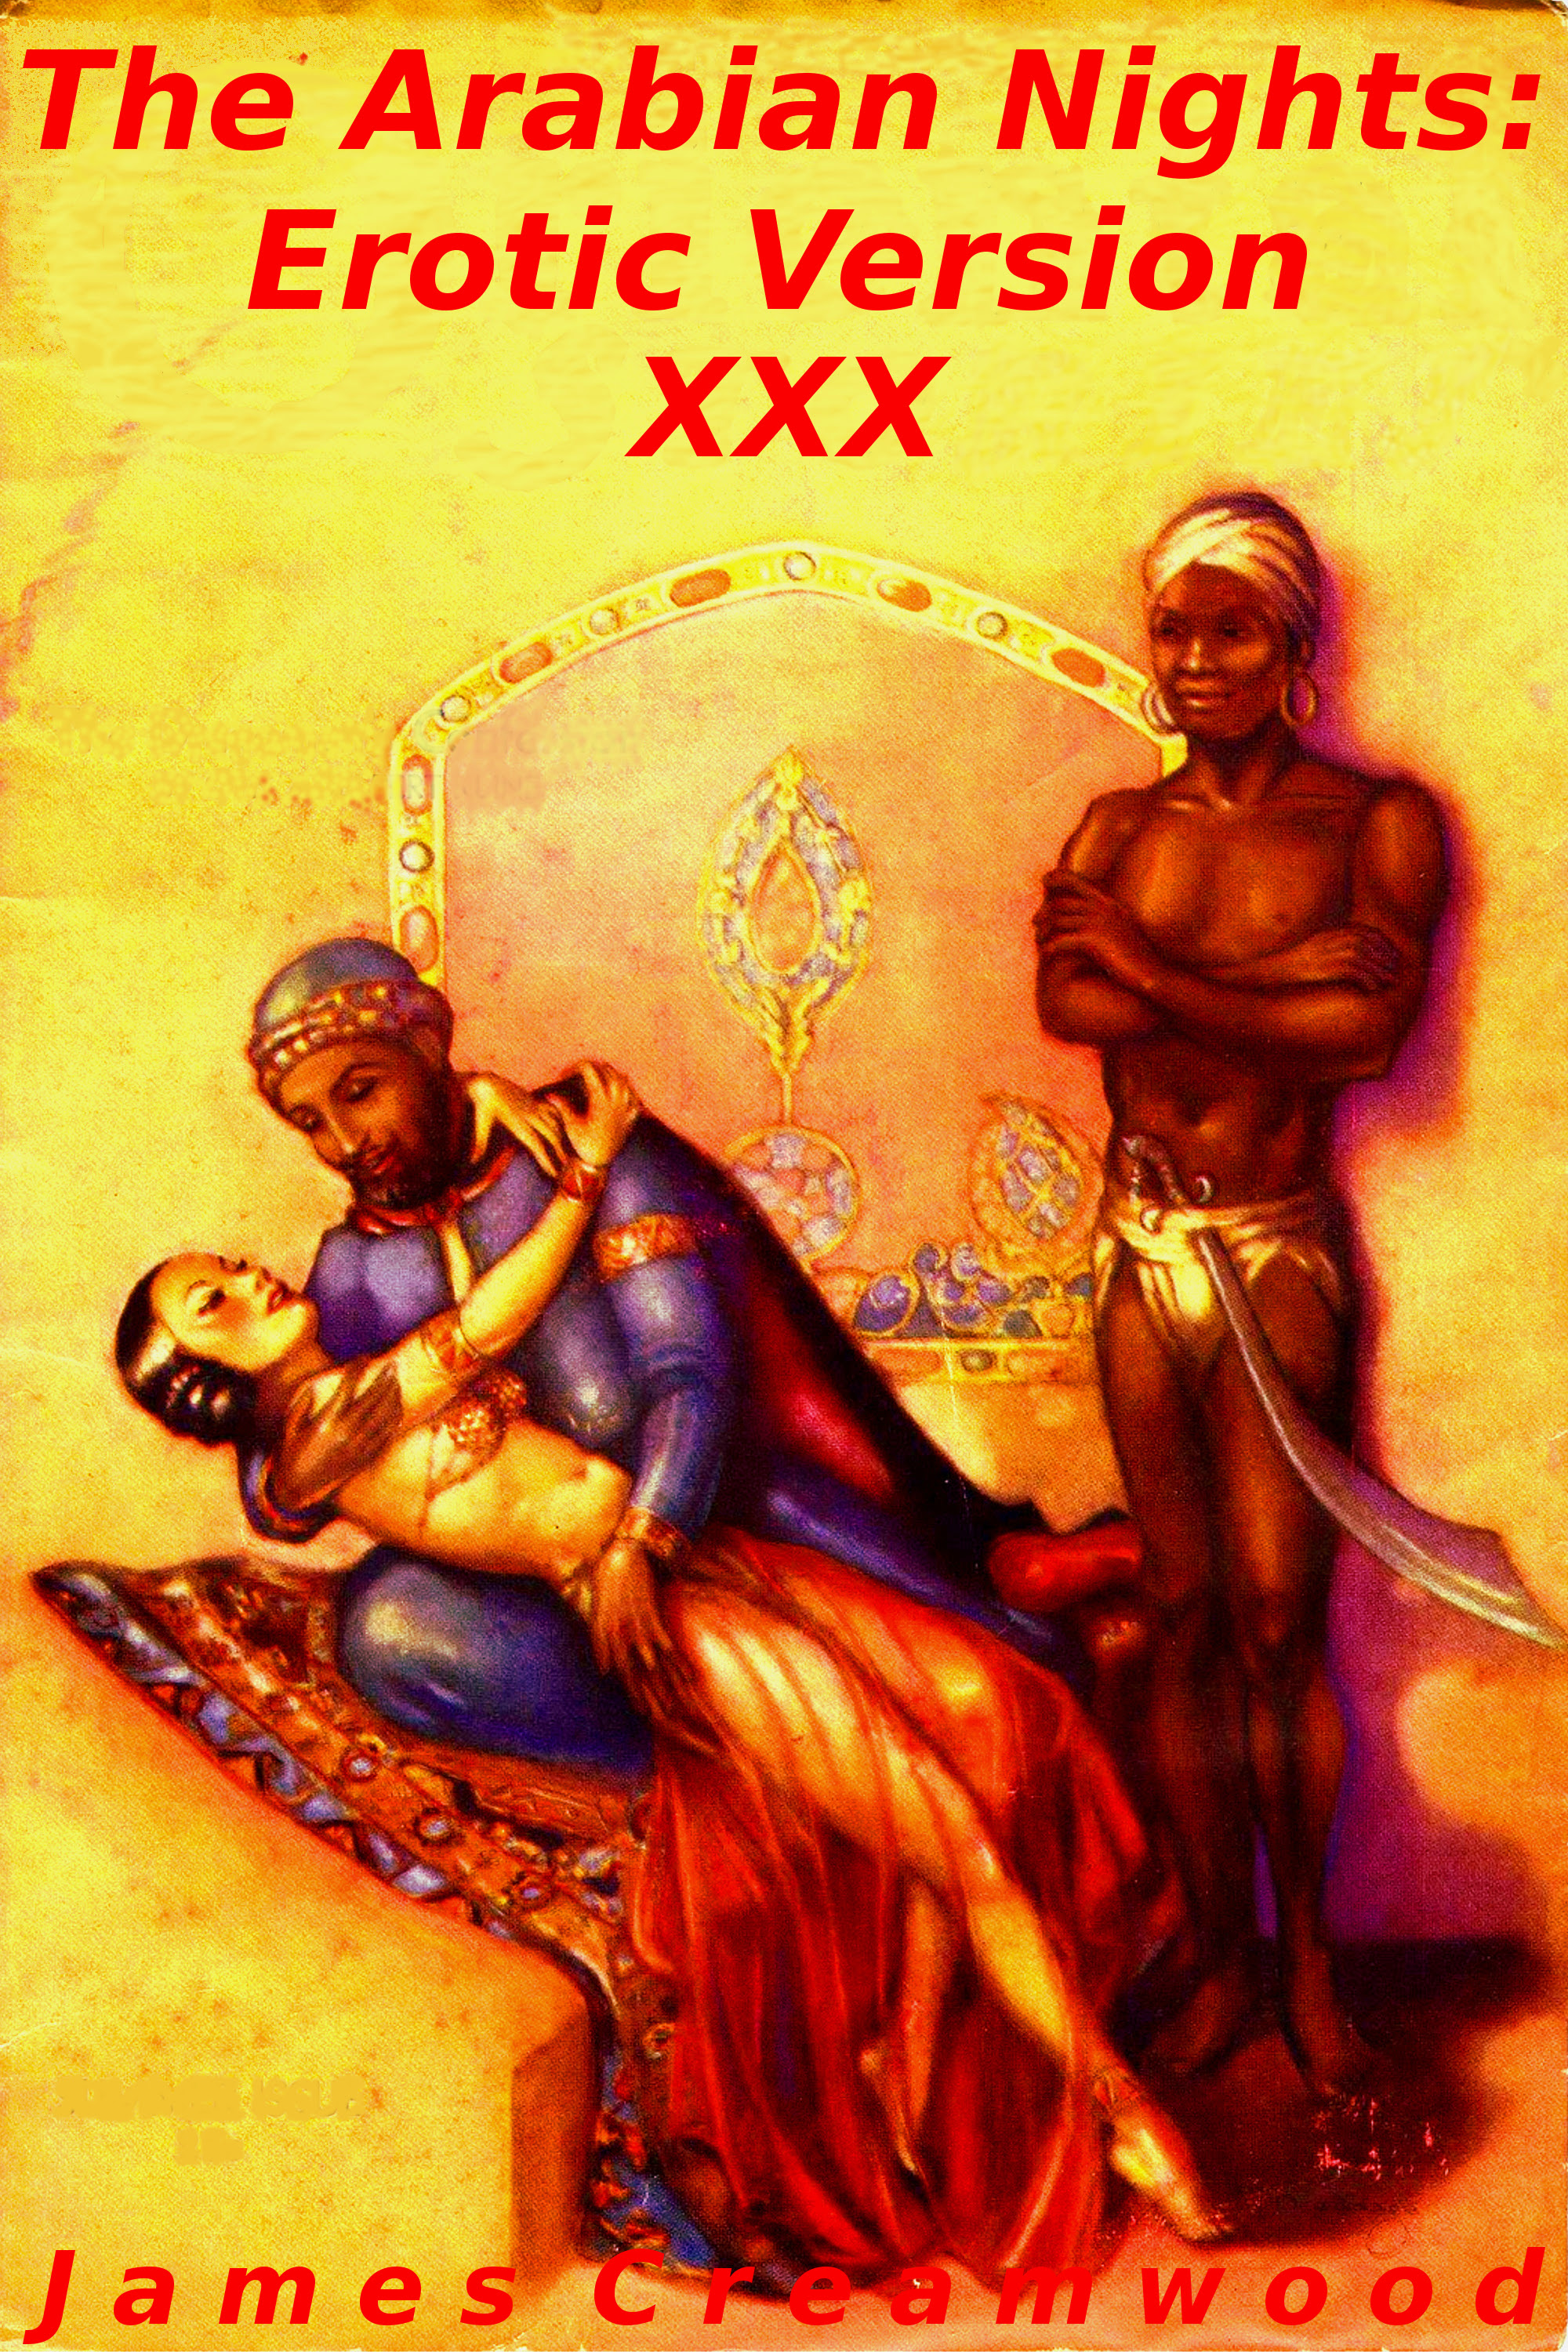 Arabian Sex Art - The Arabian Nights: Erotic Version XXX, an Ebook by James Creamwood